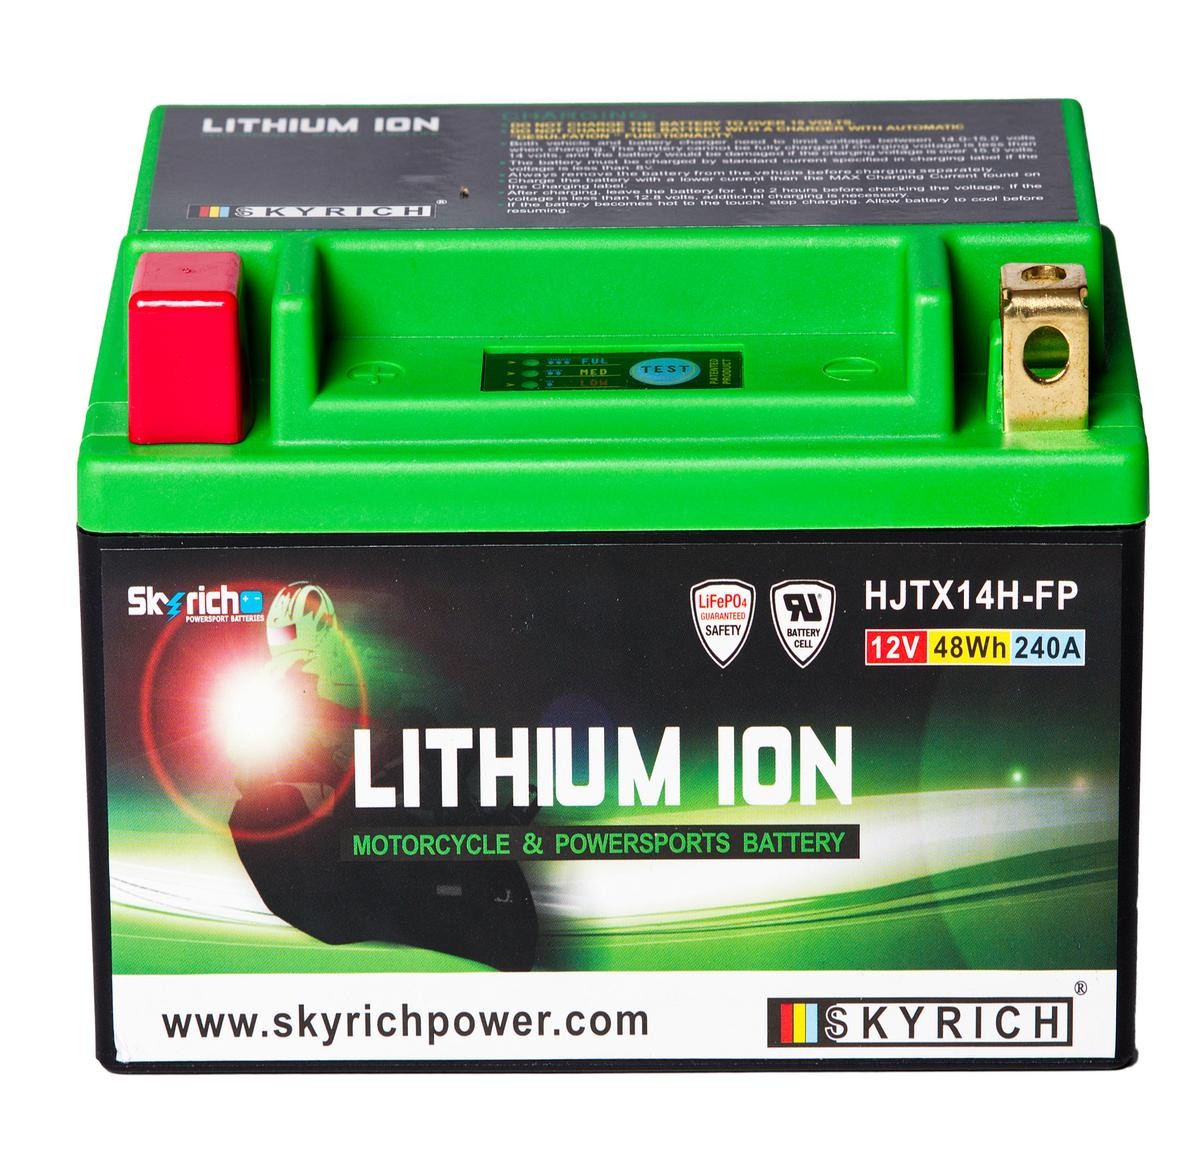 SKYRICH LITHIUM ION Batterie 12V 4Ah 240A N Li-Ionen-Batterie HJTX14H-FP KTM Mofa Maxi-Scooter